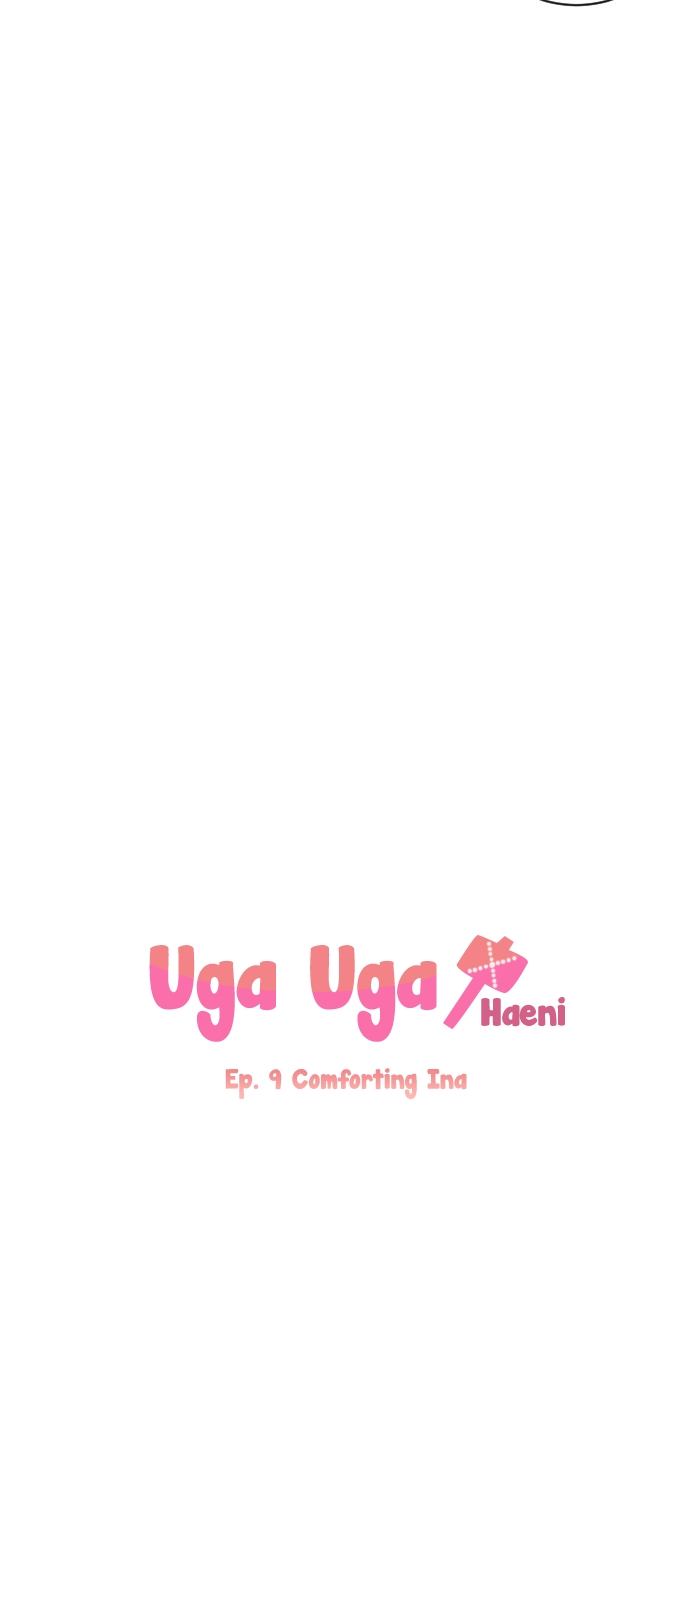 Uga Uga Ch. 9 Comforting Ina